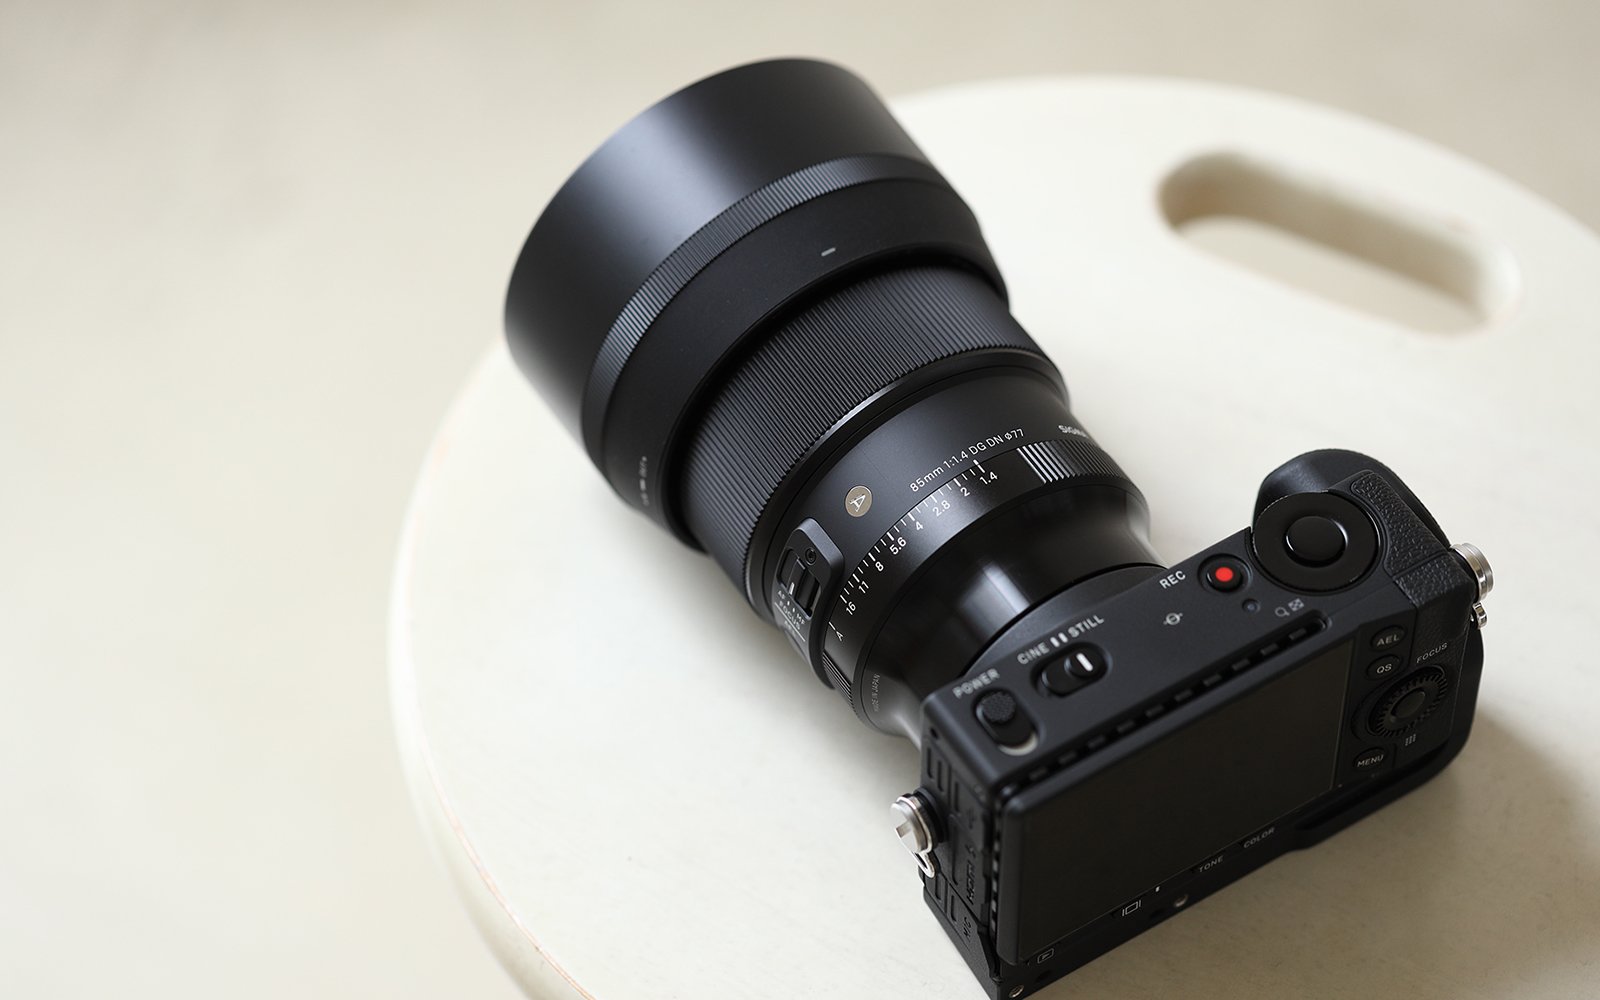 Sigma 85mm f 1.4 art. Sigma 85 1.4 DG DN. Sigma 85mm f1.4 DG DN Art Sony e. Sigma 85mm f/1.4. Sigma 85mm f/1.4 DG DN Art Lens for Sony e.